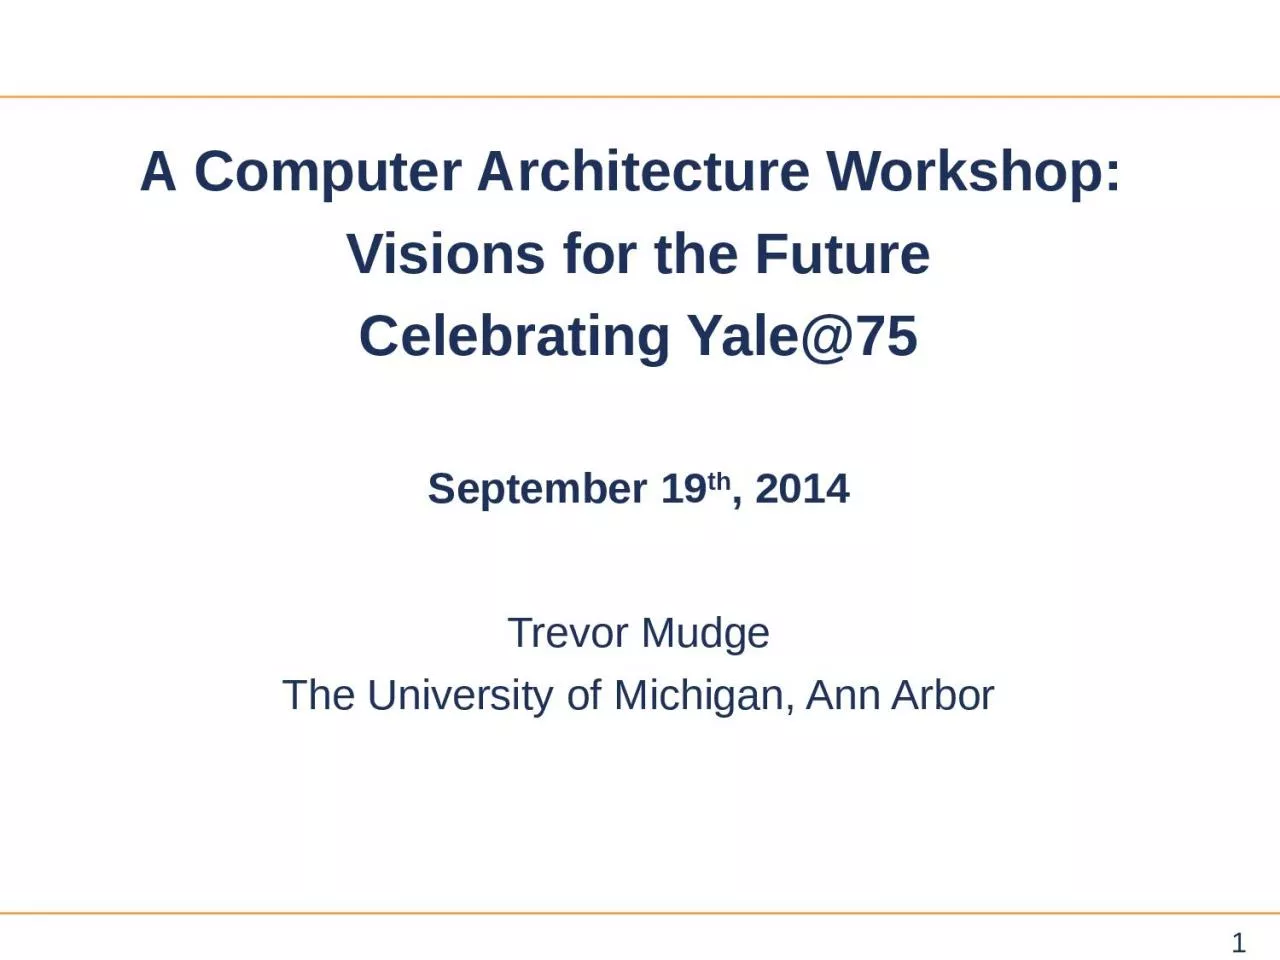 A Computer Architecture Workshop: